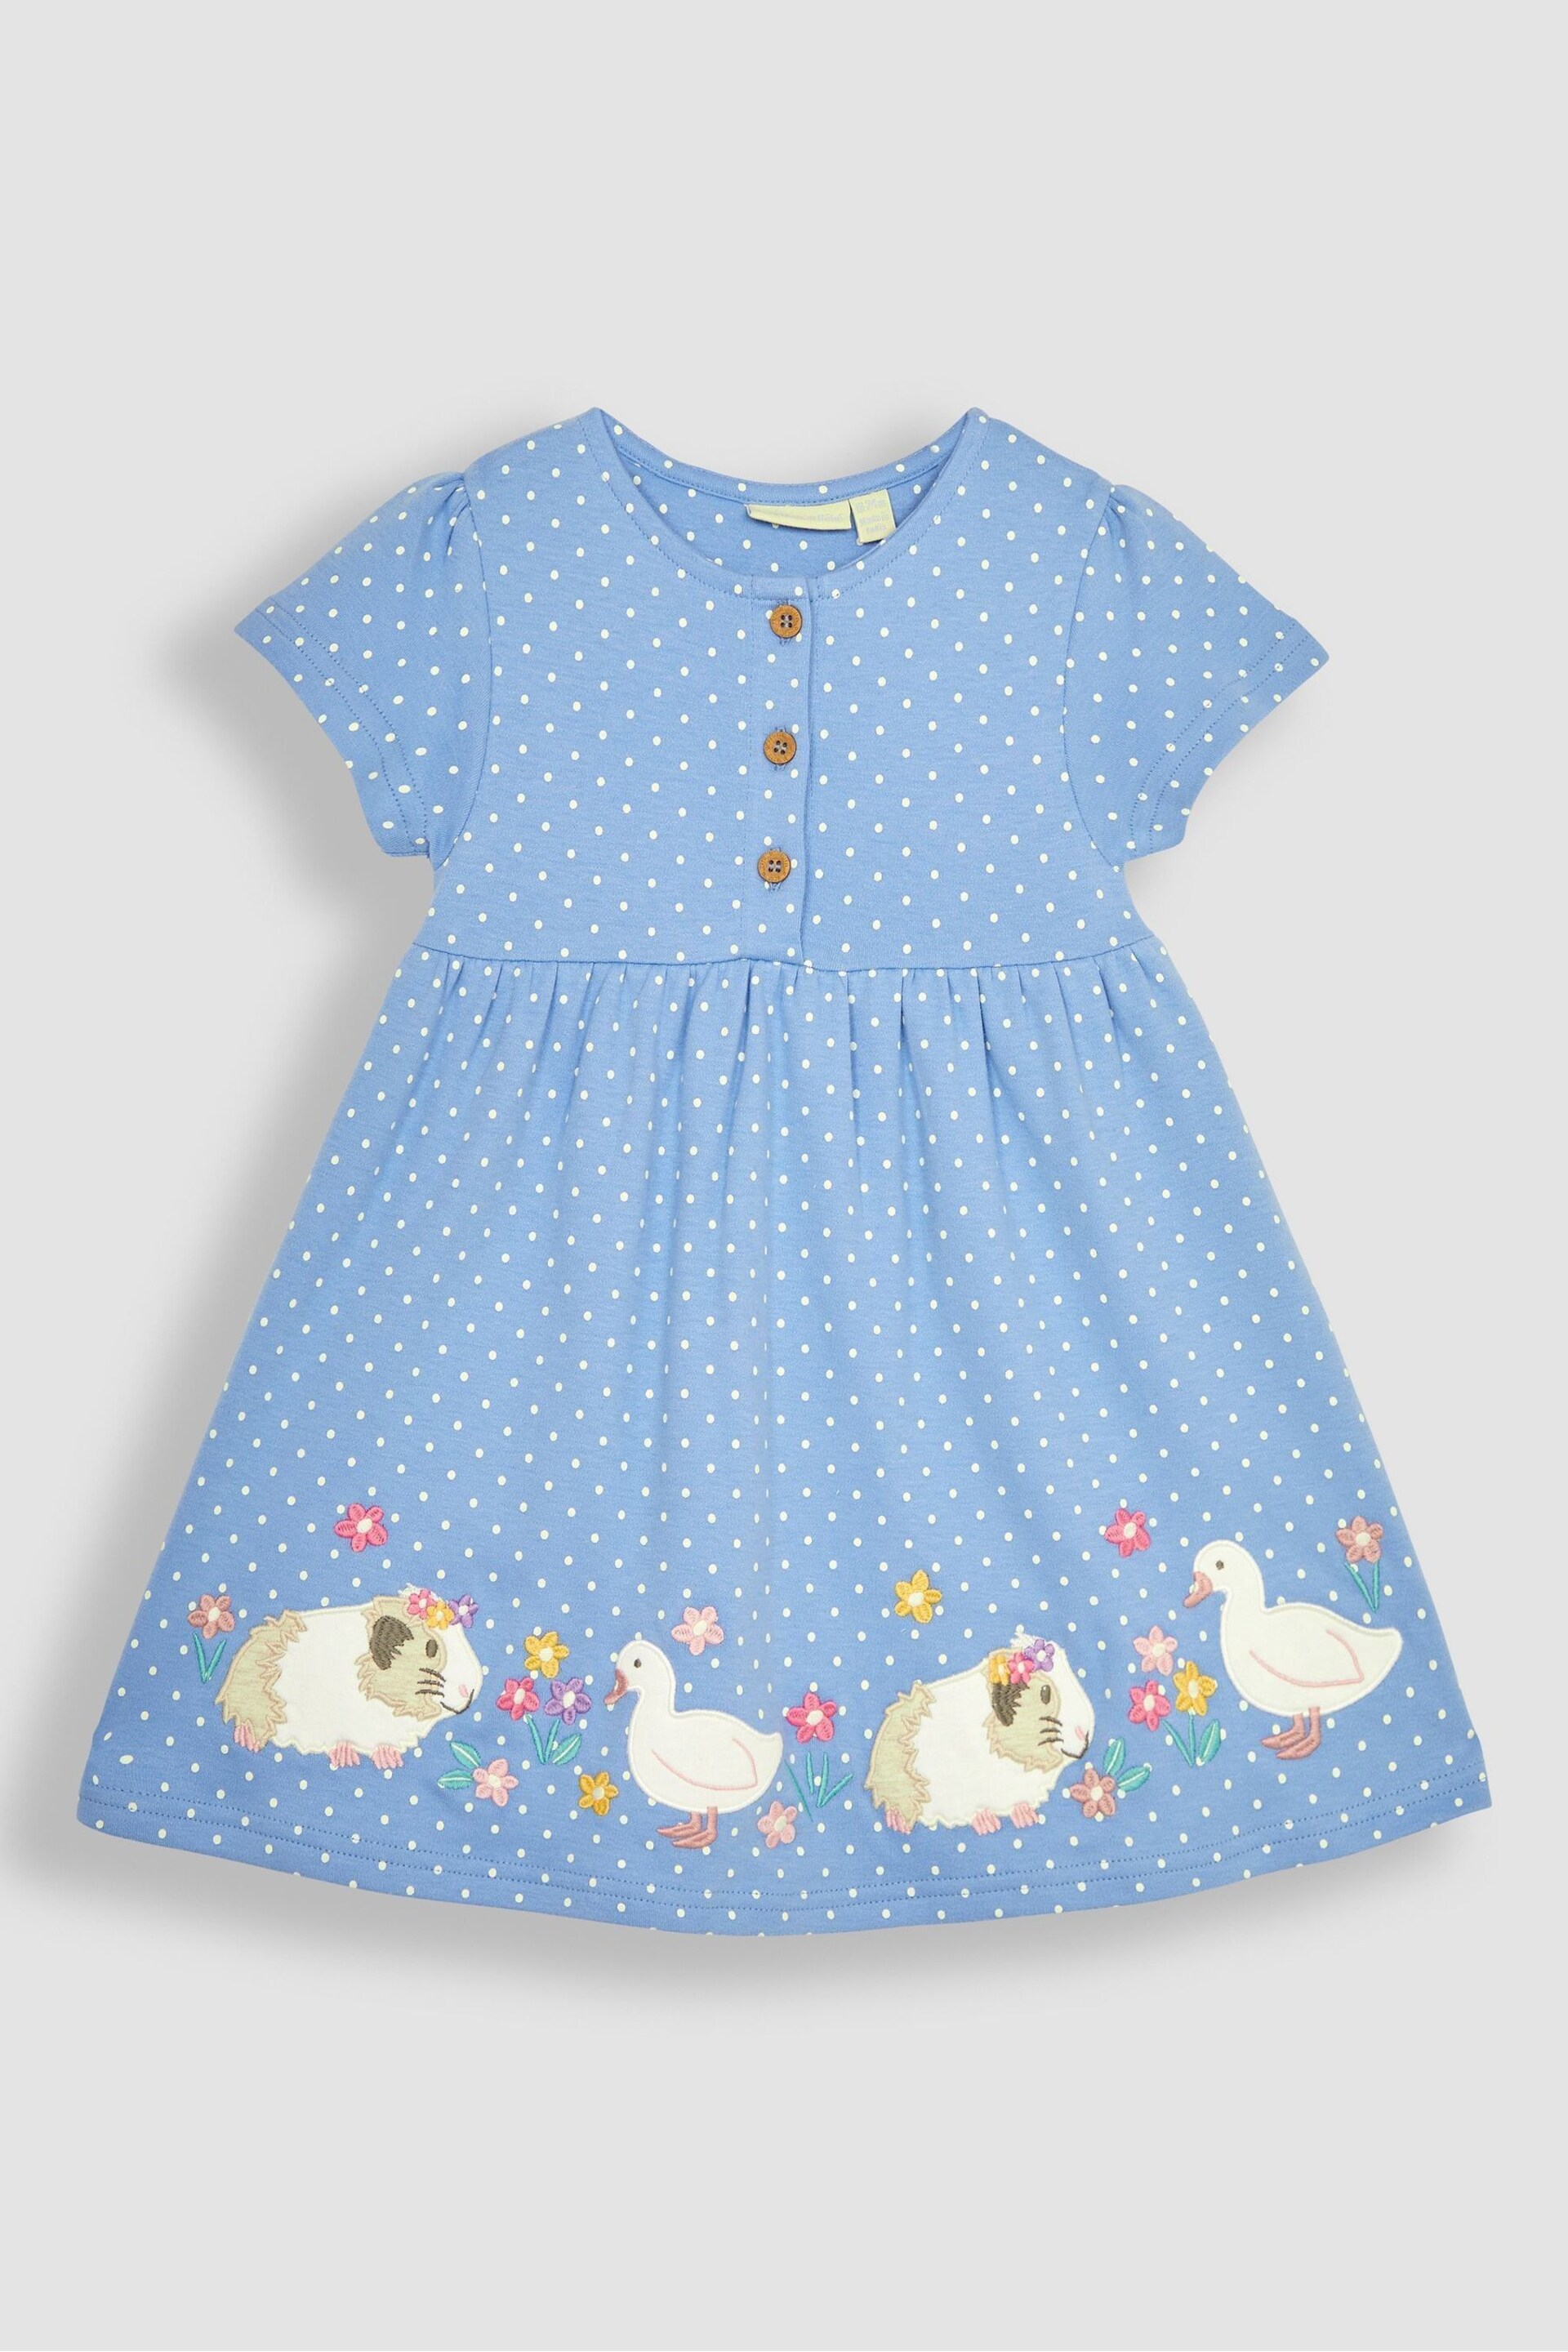 JoJo Maman Bébé Blue Guinea Pig & Duck Spot Appliqué Button Front Jersey Dress - Image 1 of 3